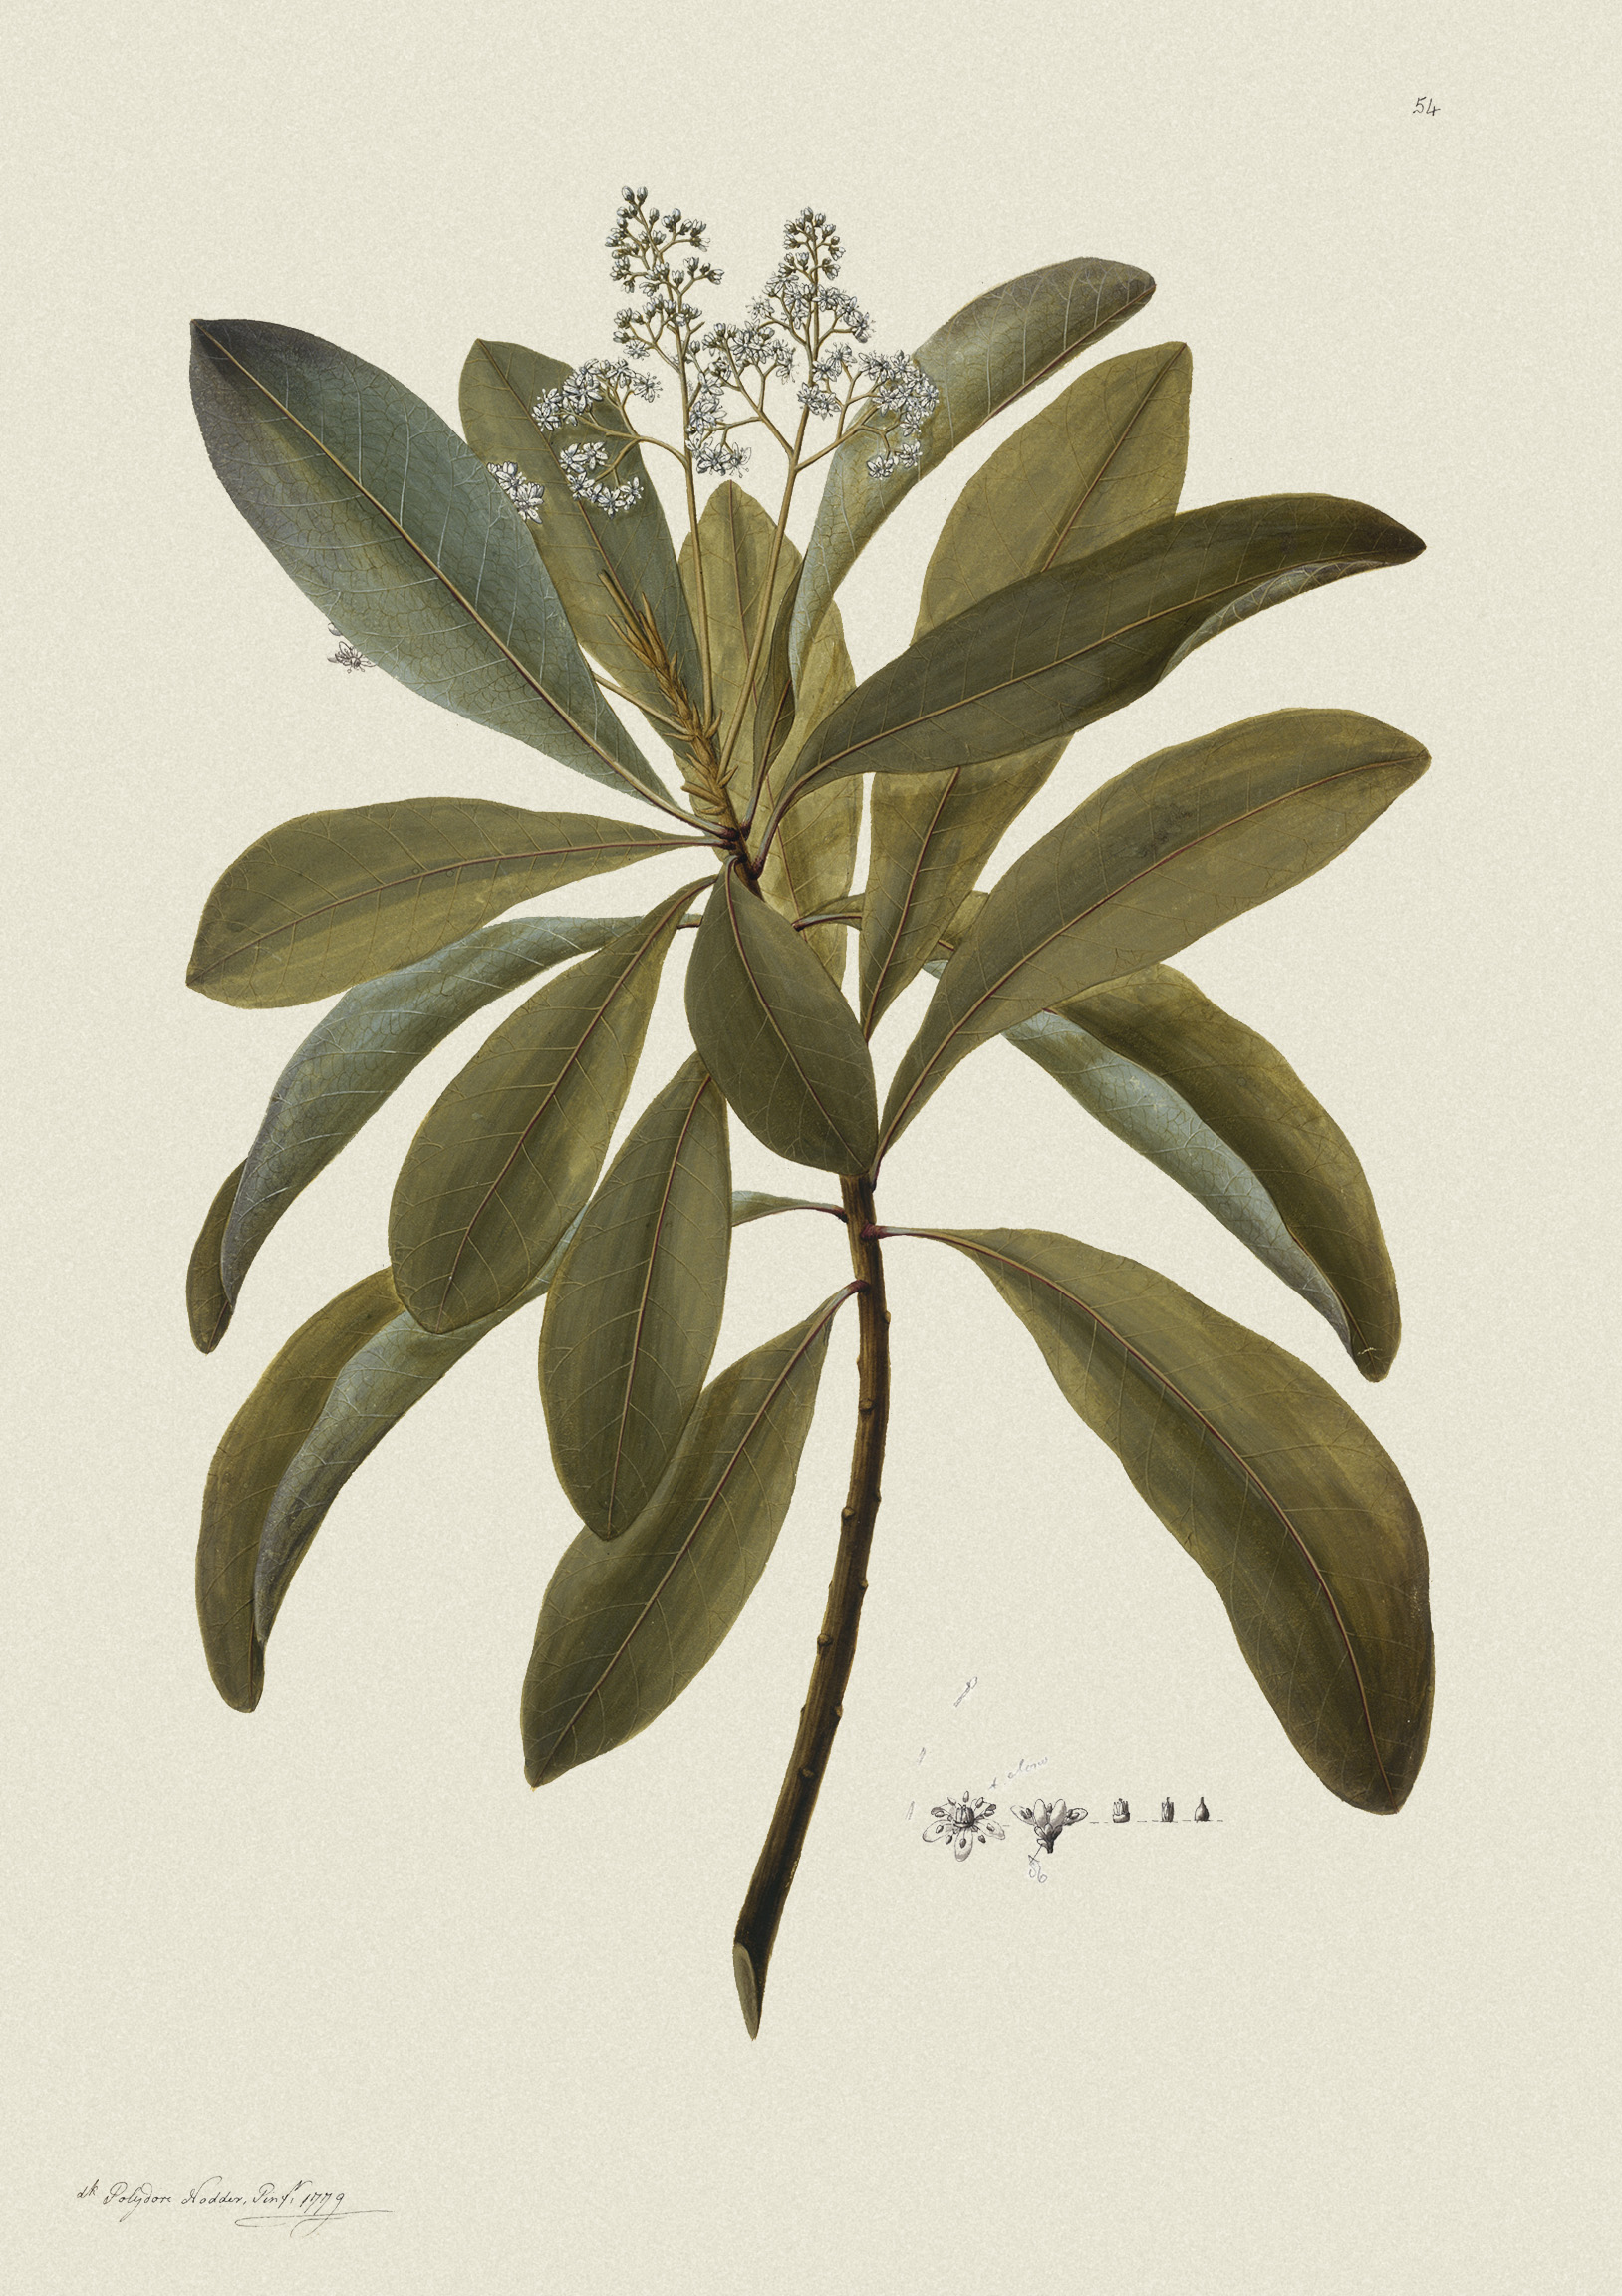 Buchanania Arborescens